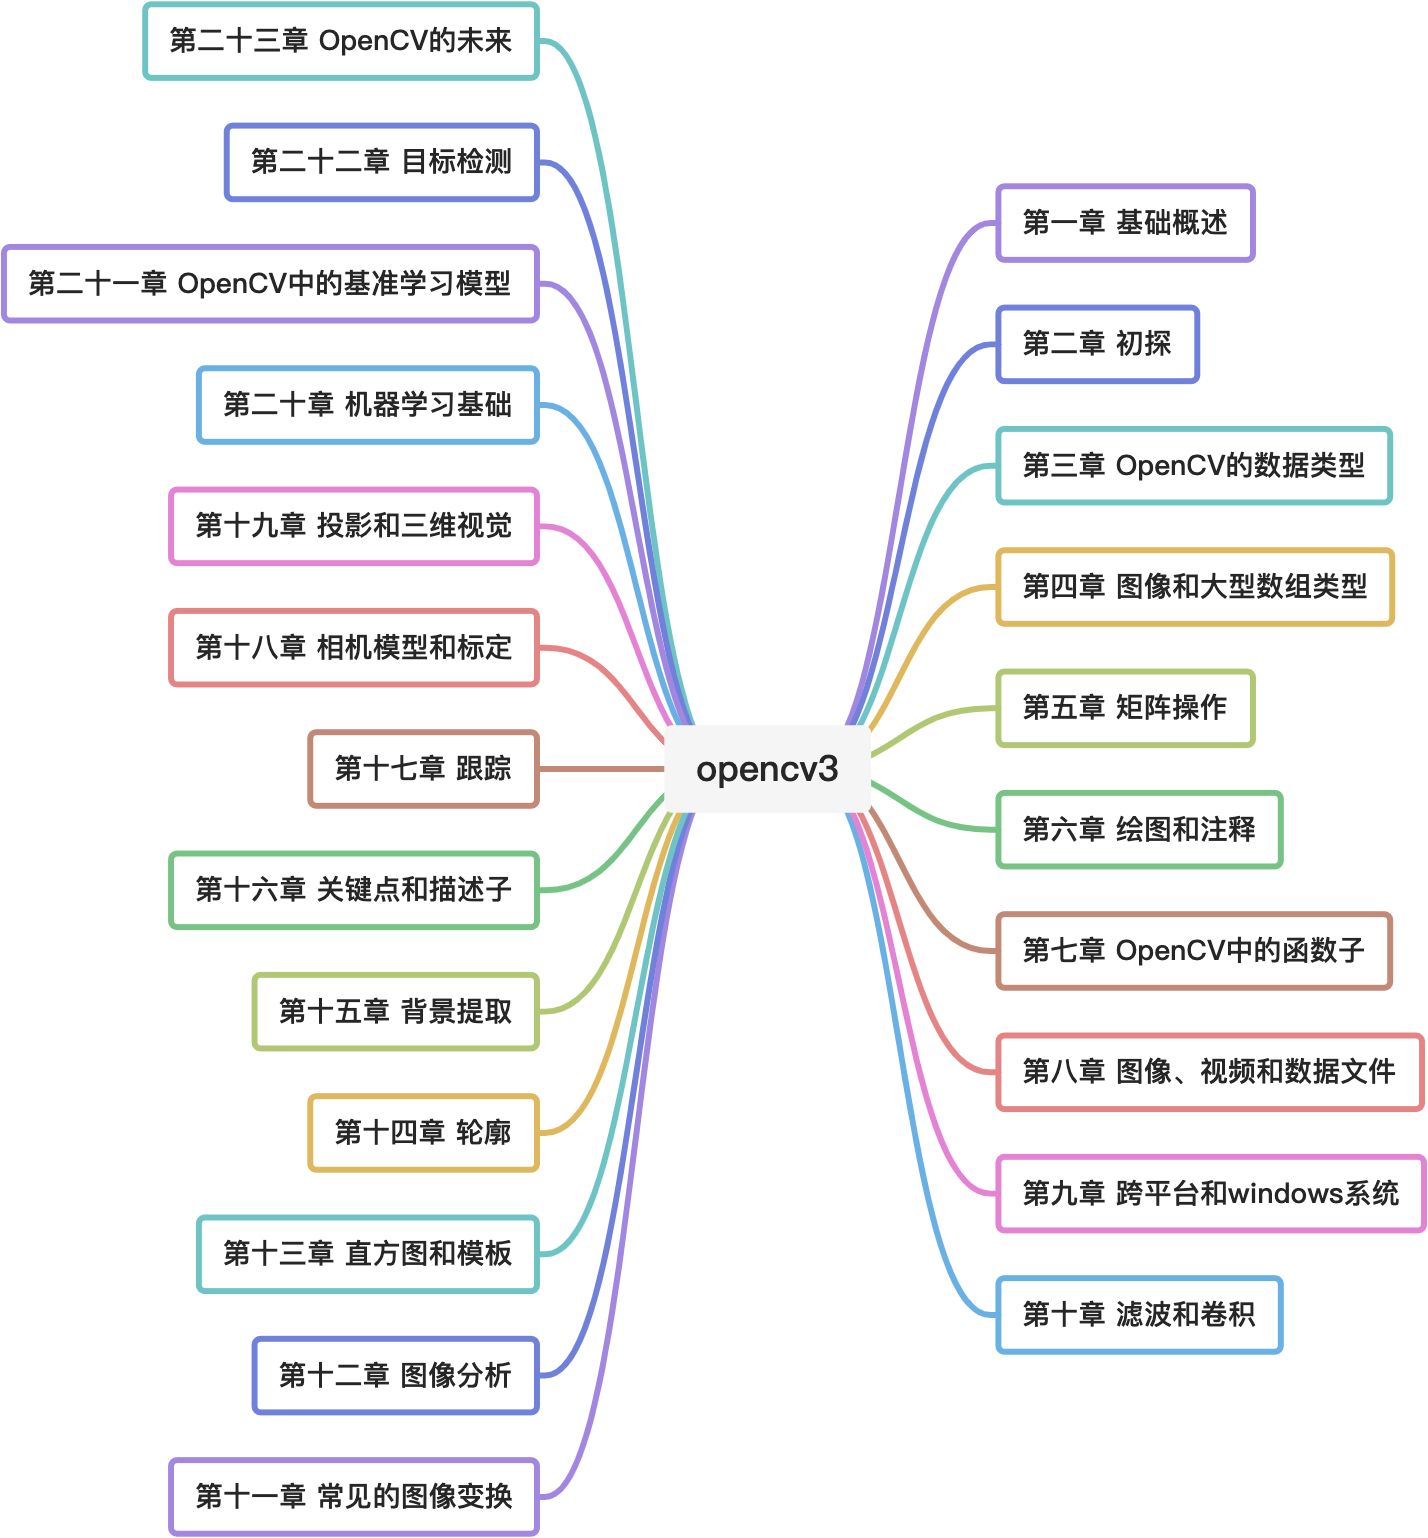 OpenCV知识结构 - 图1